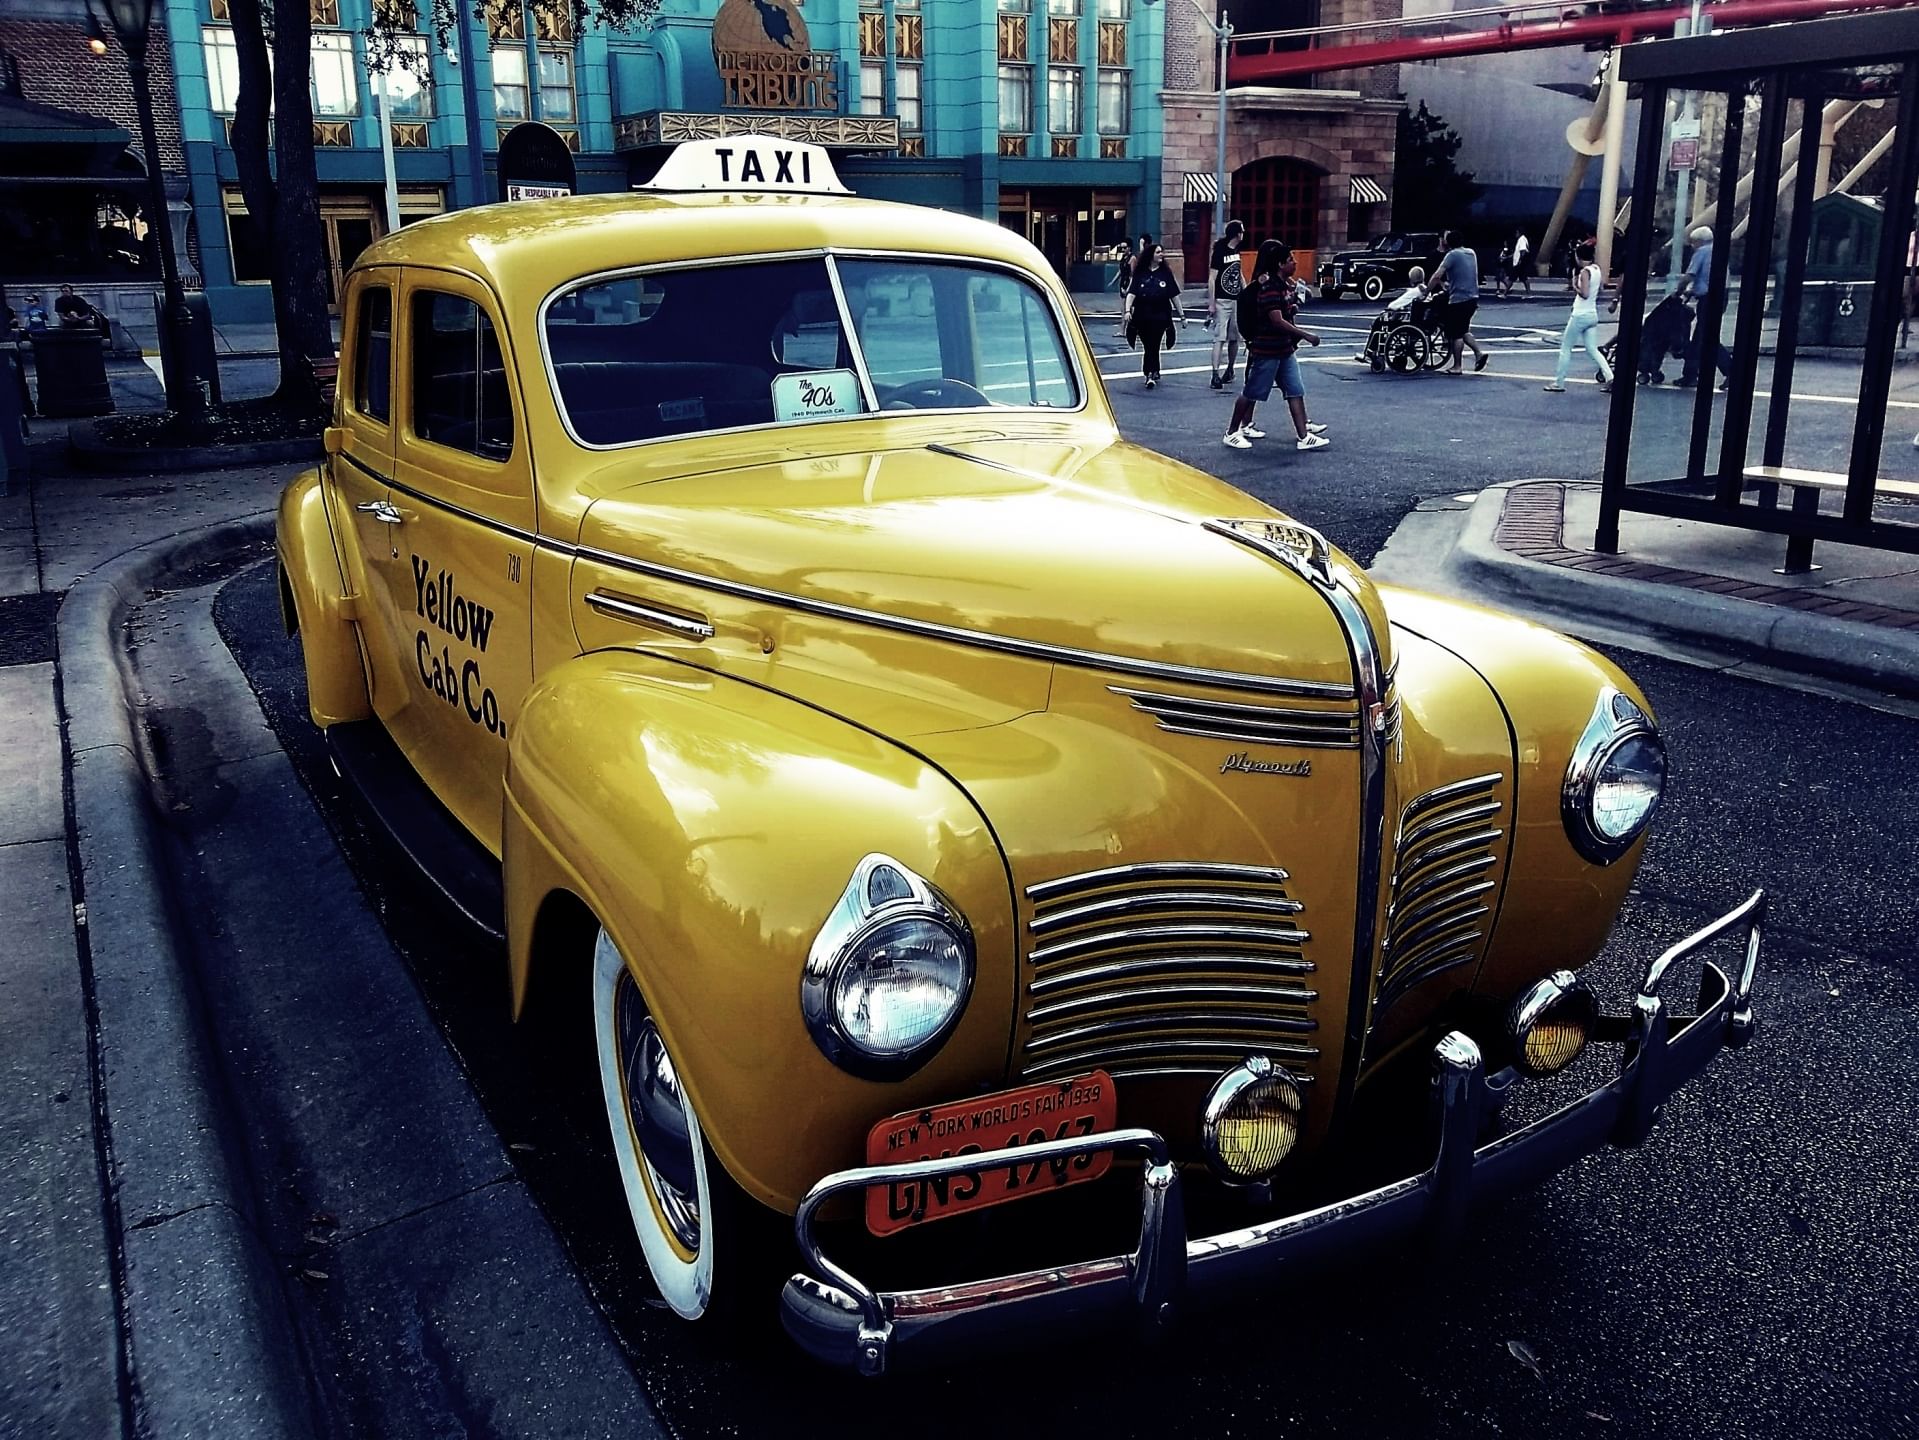 Старый таксопарк. Ford 1950 Yellow Cab Taxi. Старое такси. Автомобиль «такси». Желтый автомобиль.